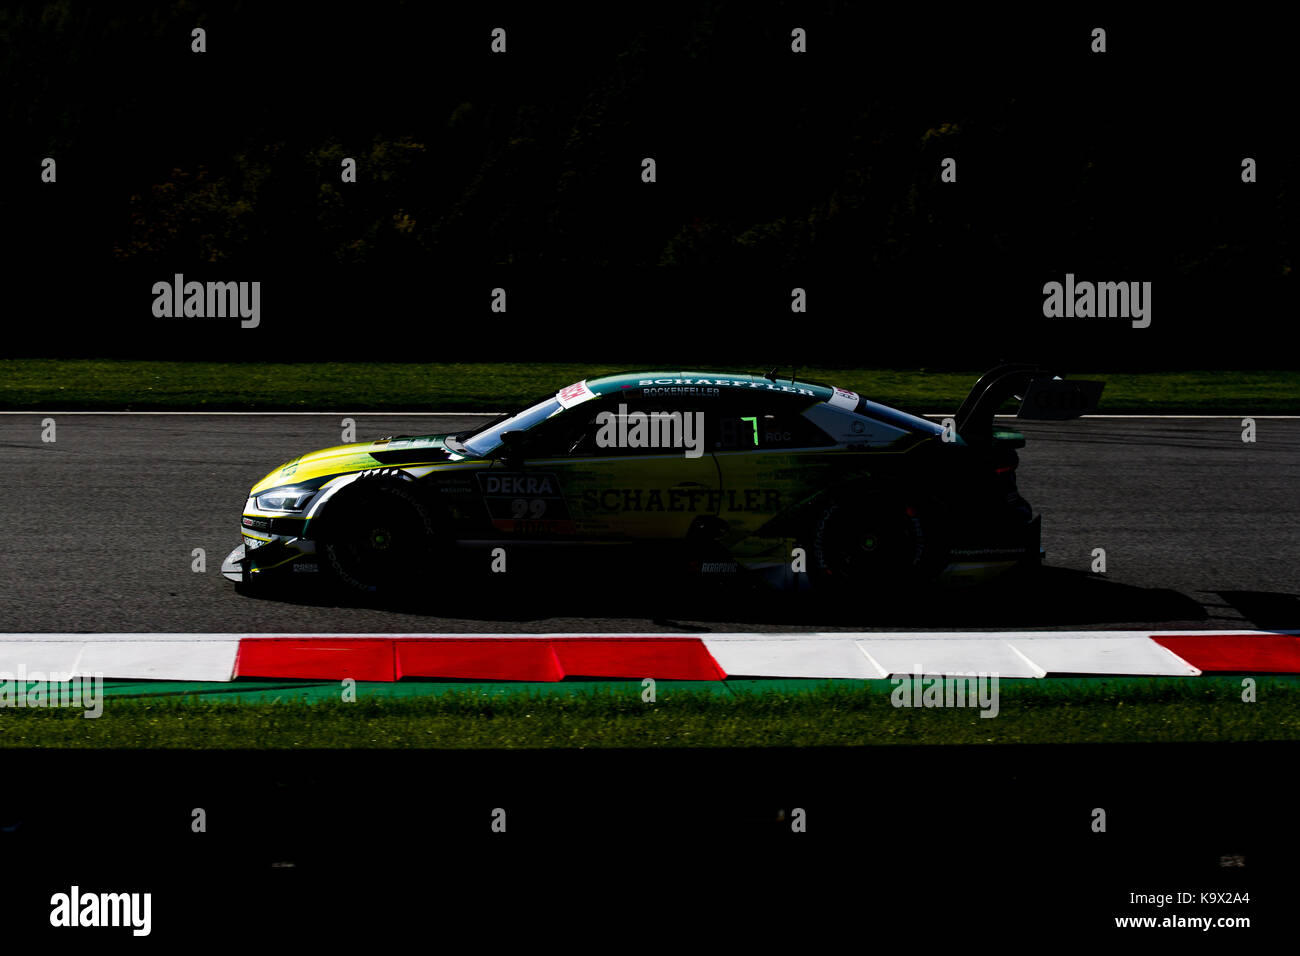 Motorsport: DTM 08 Spielberg 2017, Schaeffler Audi RS5 DTM #99 (Audi Sport Team Phoenix), Mike Rockenfeller | Verwendung weltweit Stockfoto